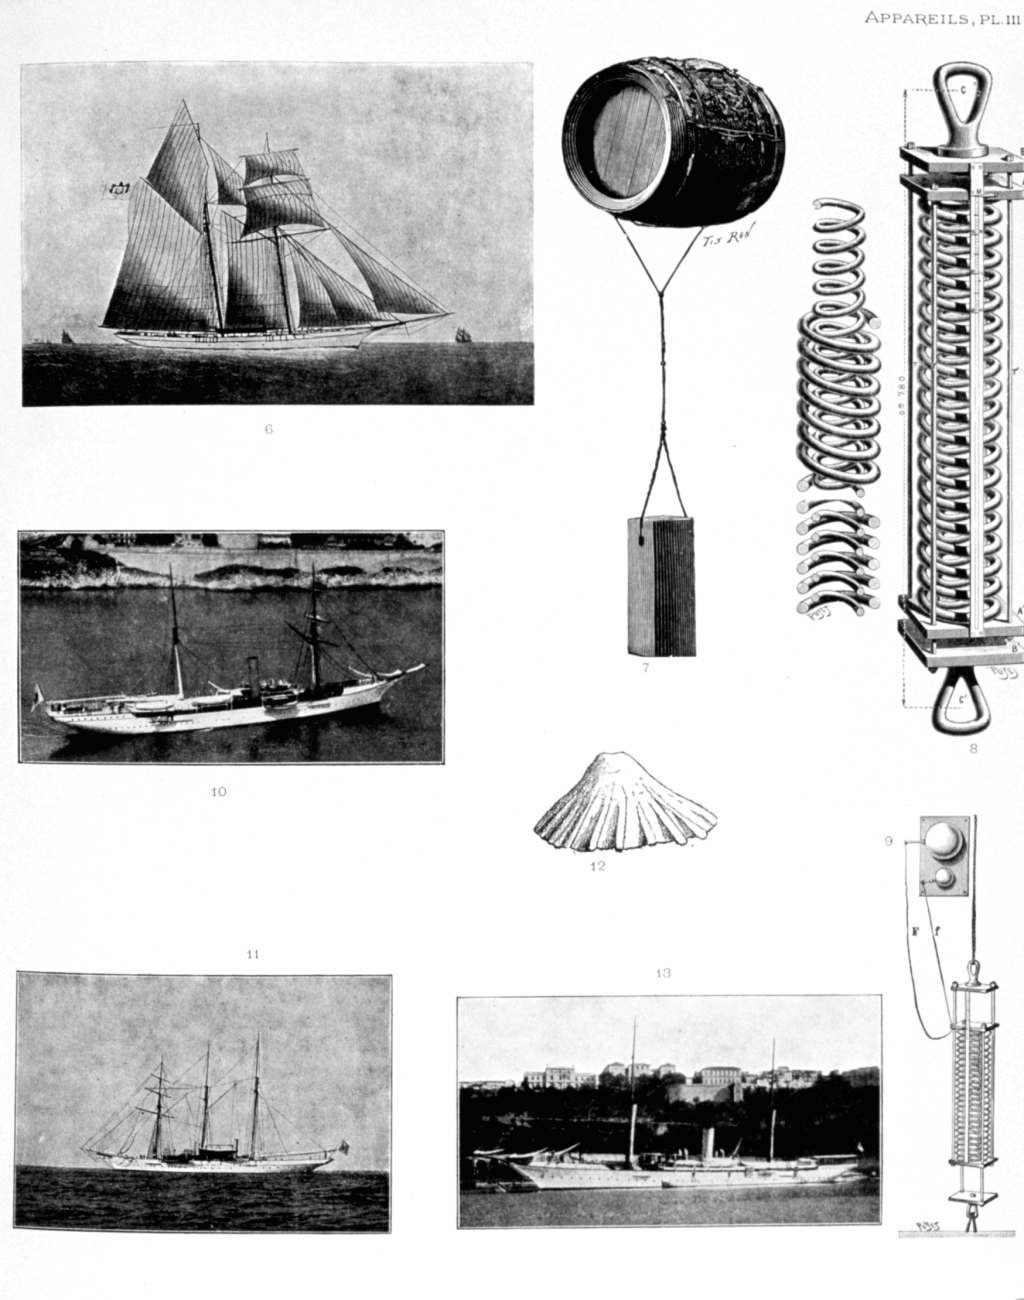 Prince Albert's ships, figure 6 - the HIRONDELLE; Figure 10 - PRINCESS ALICE II; figure 11 - PRINCESS ALICE; figure 13 - the HIRONDELLE II